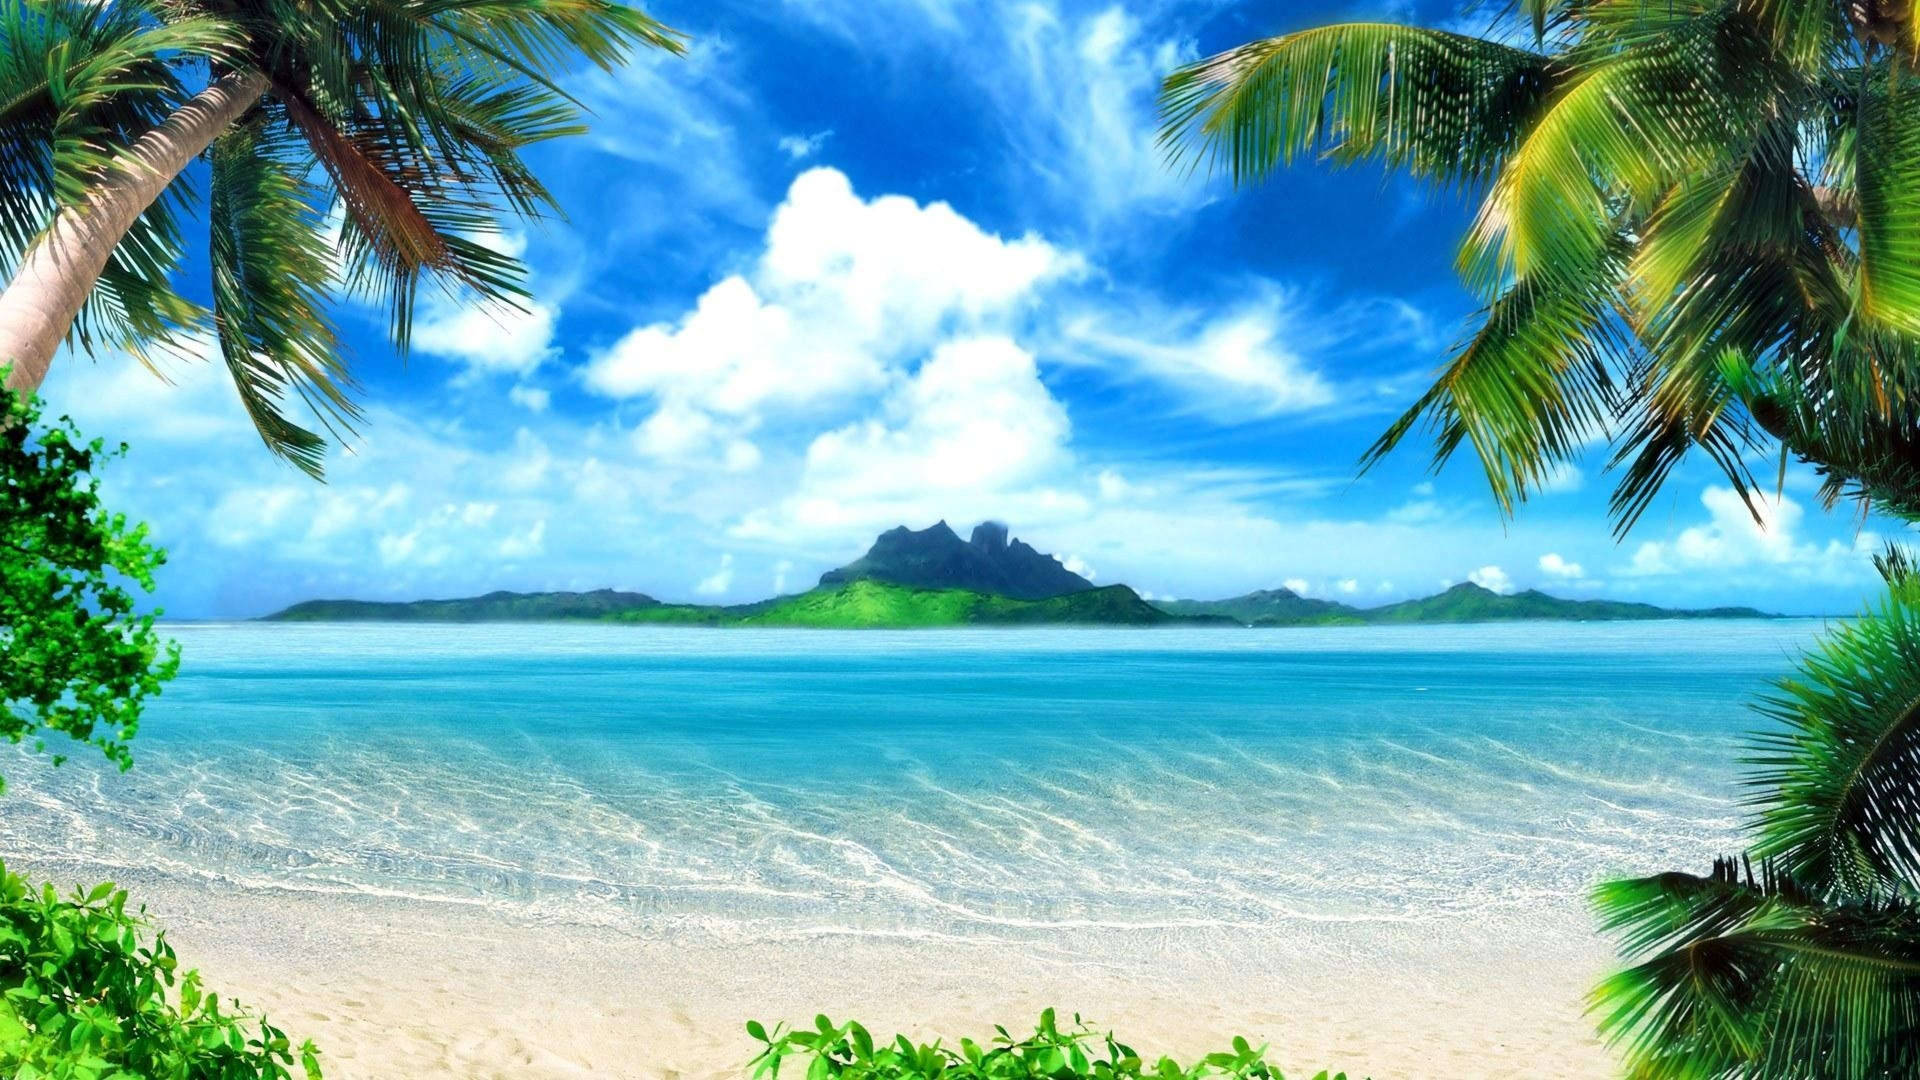 Tropical Island Beach Scenes Desktop Wallpaper